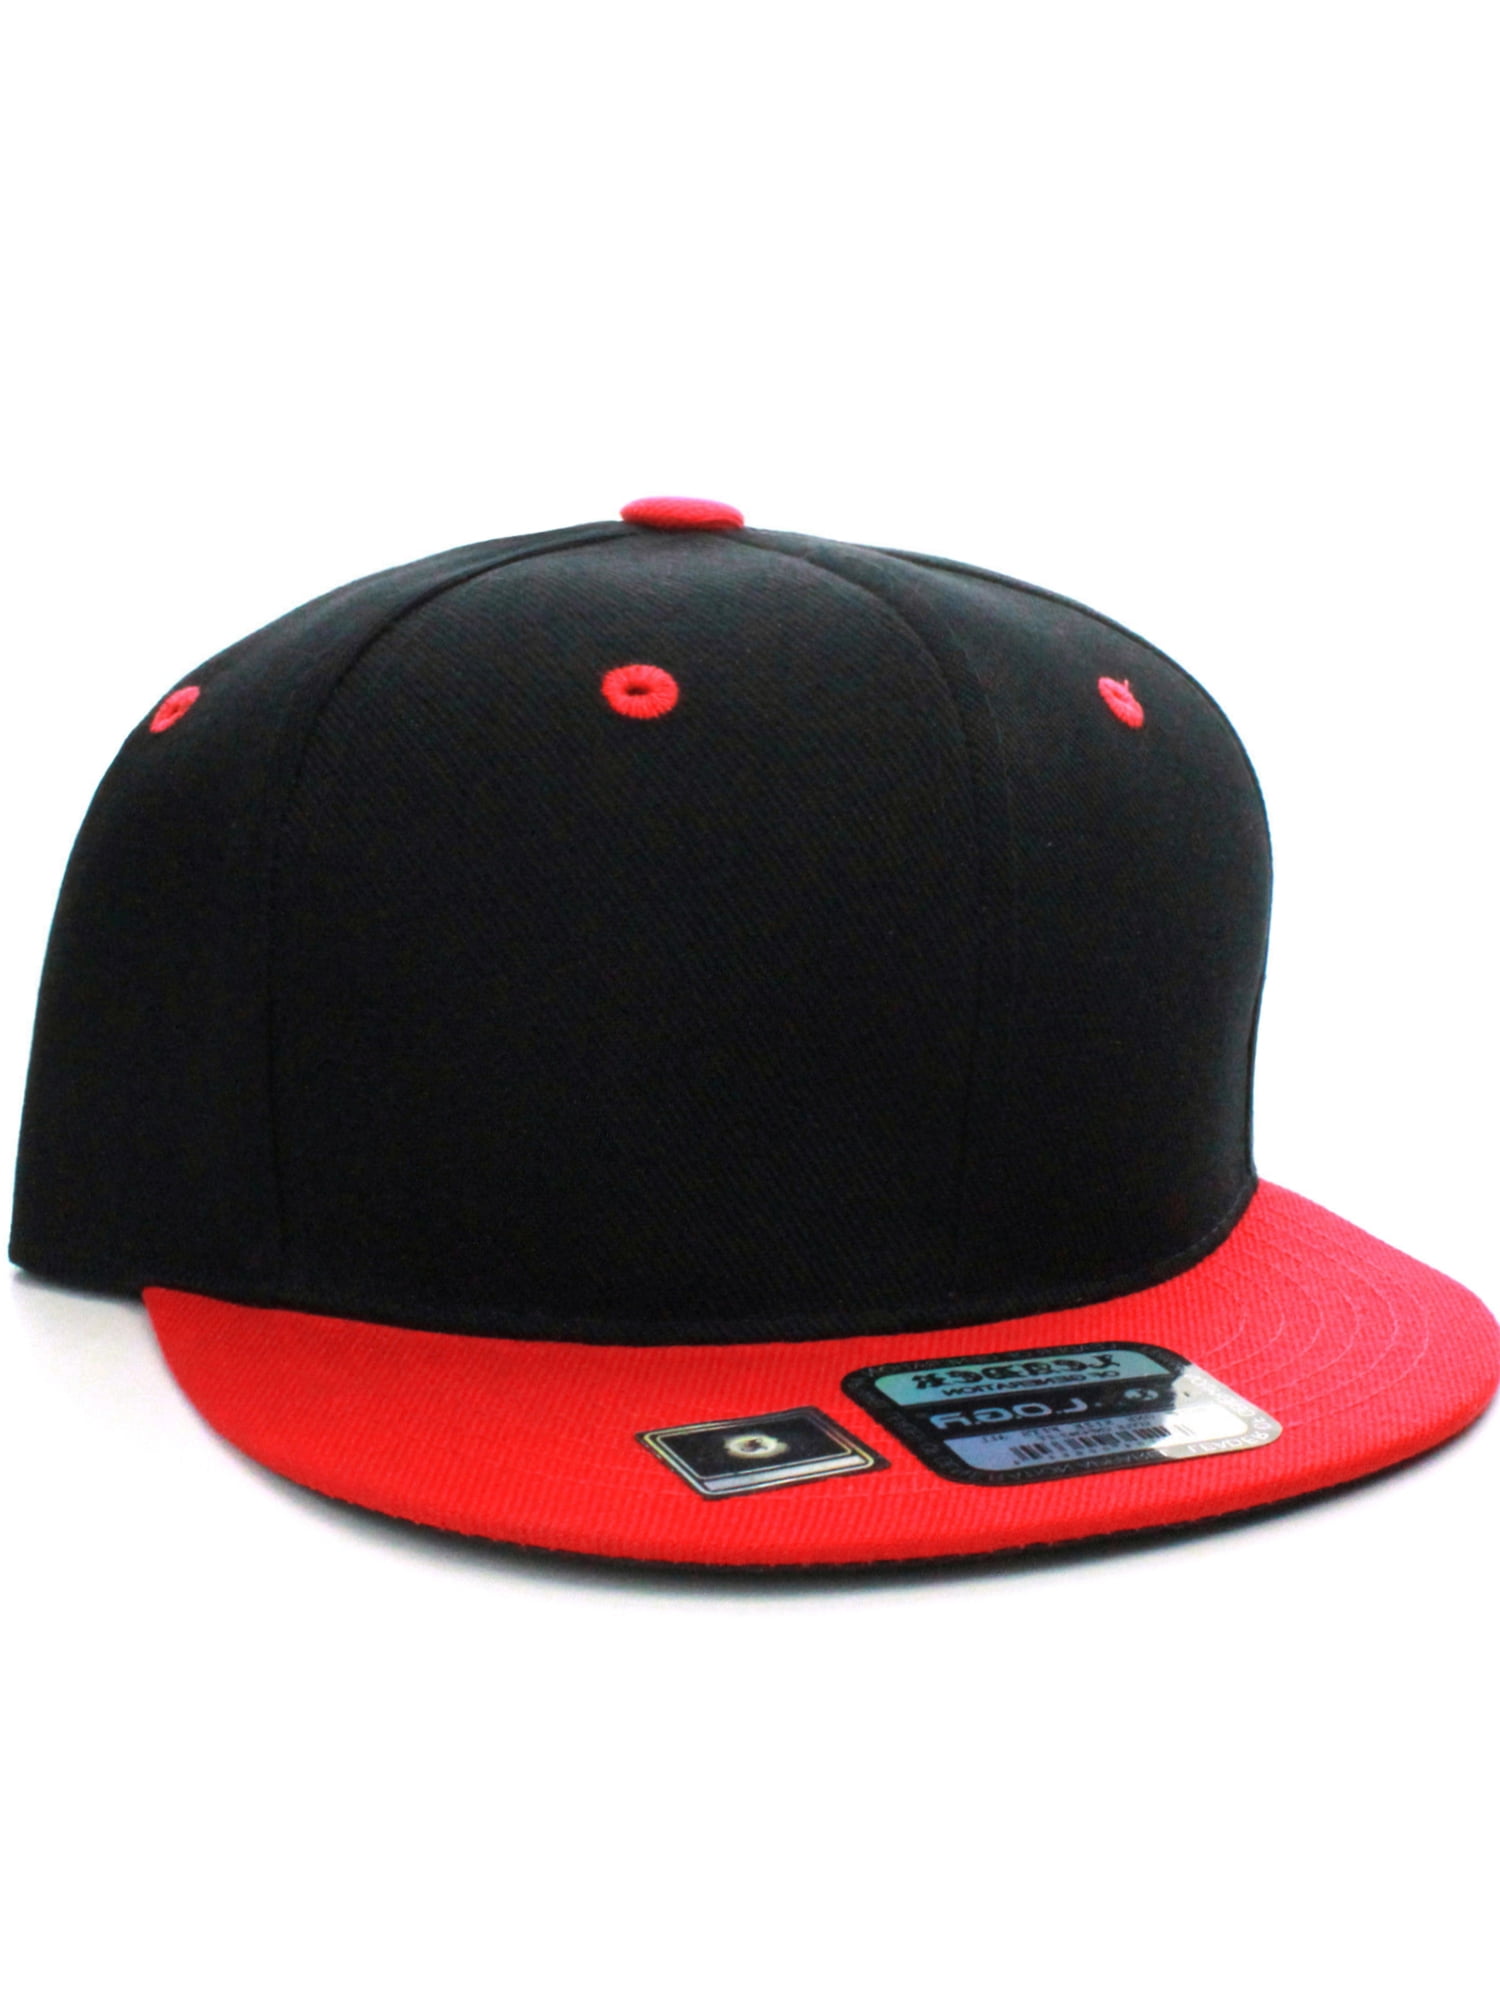 Flat Brim Snapback or Velcro Closure Hats (Black or Red) – Positive Black  Images Apparel